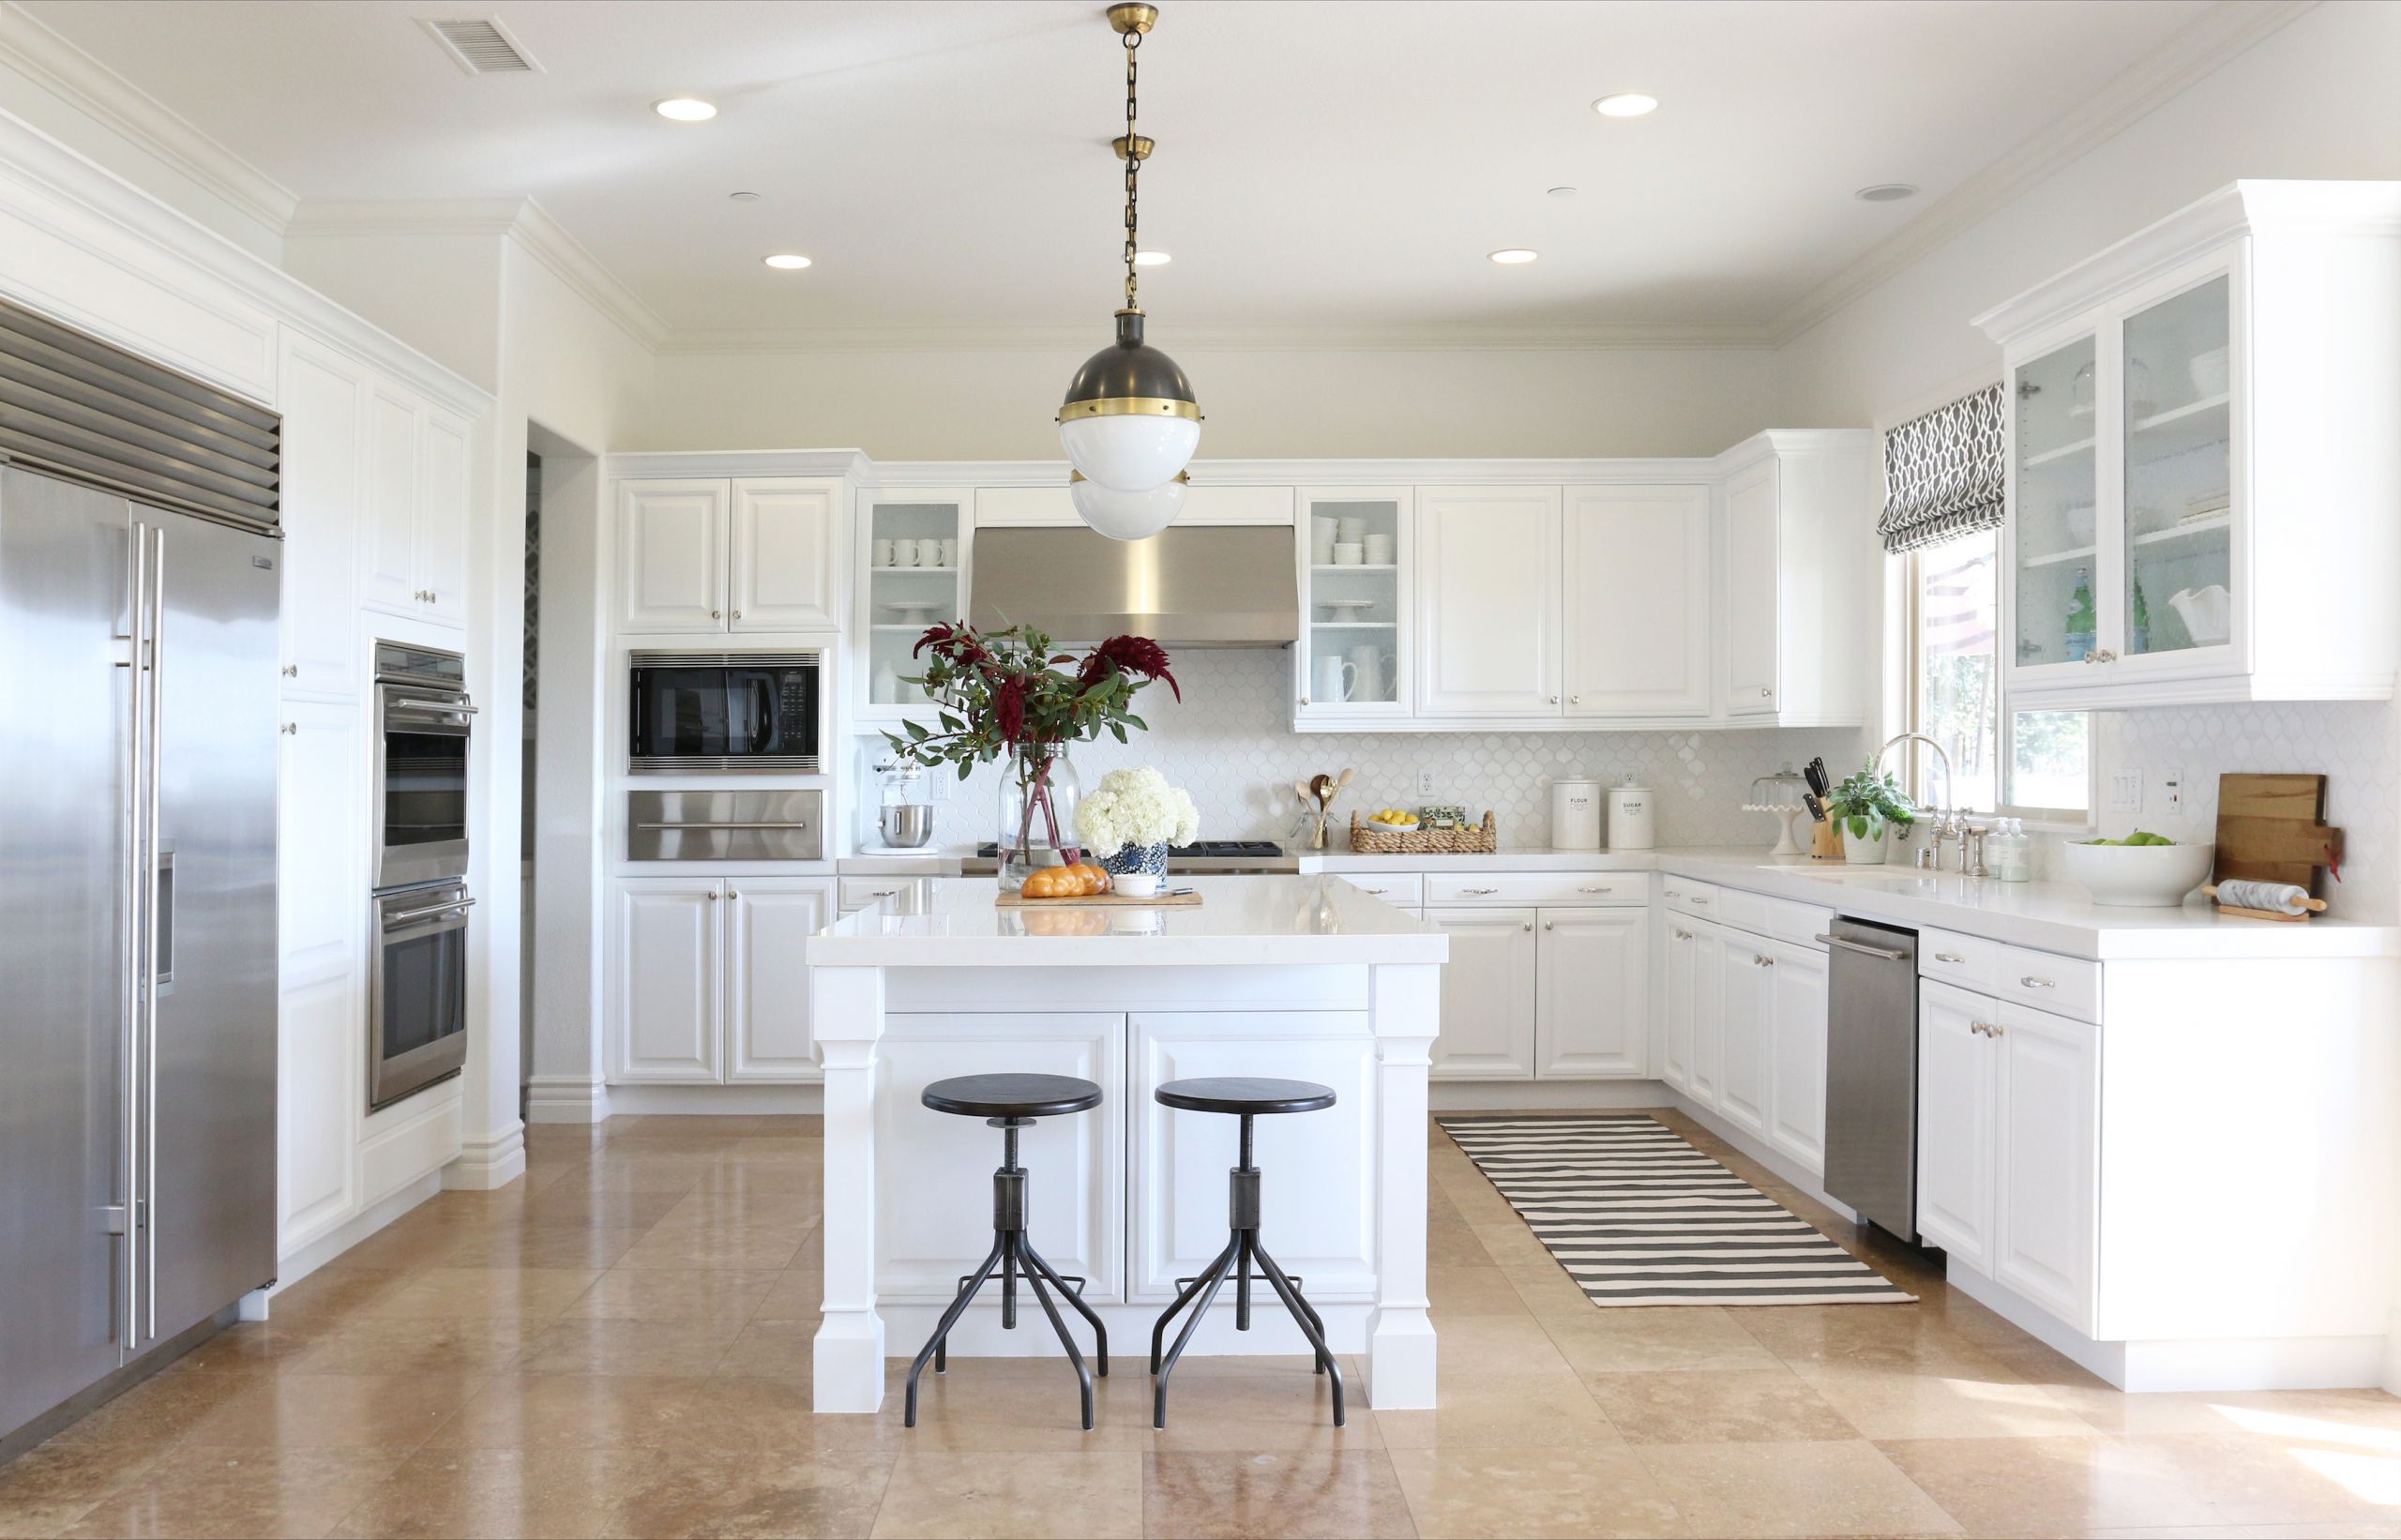 White Kitchen Cabinet Images
 11 Best White Kitchen Cabinets Design Ideas for White